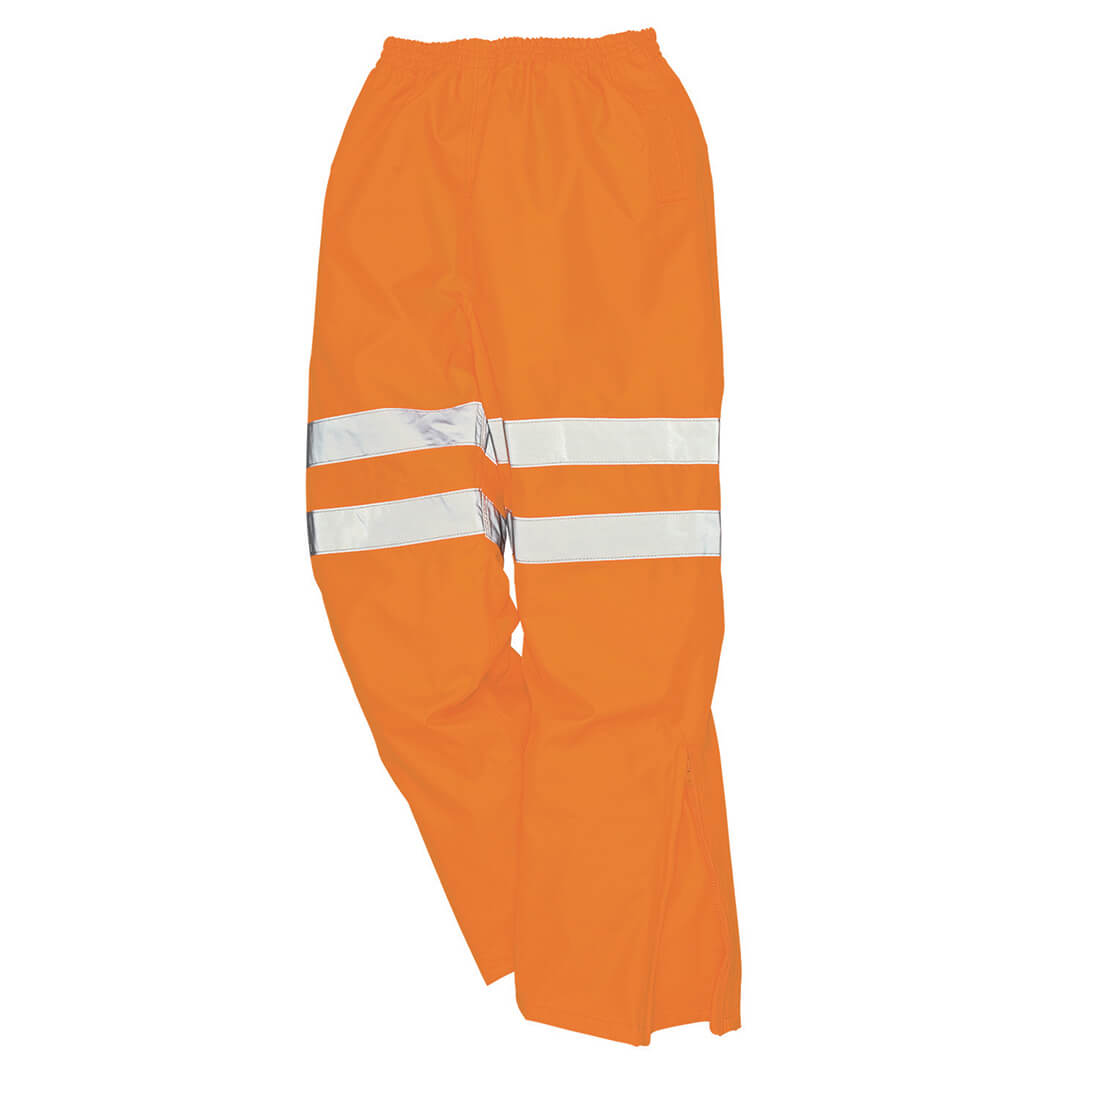 Image of Oxford Weave 300D Class 2 Breathable Hi Vis Breathable Trousers Orange 2XL